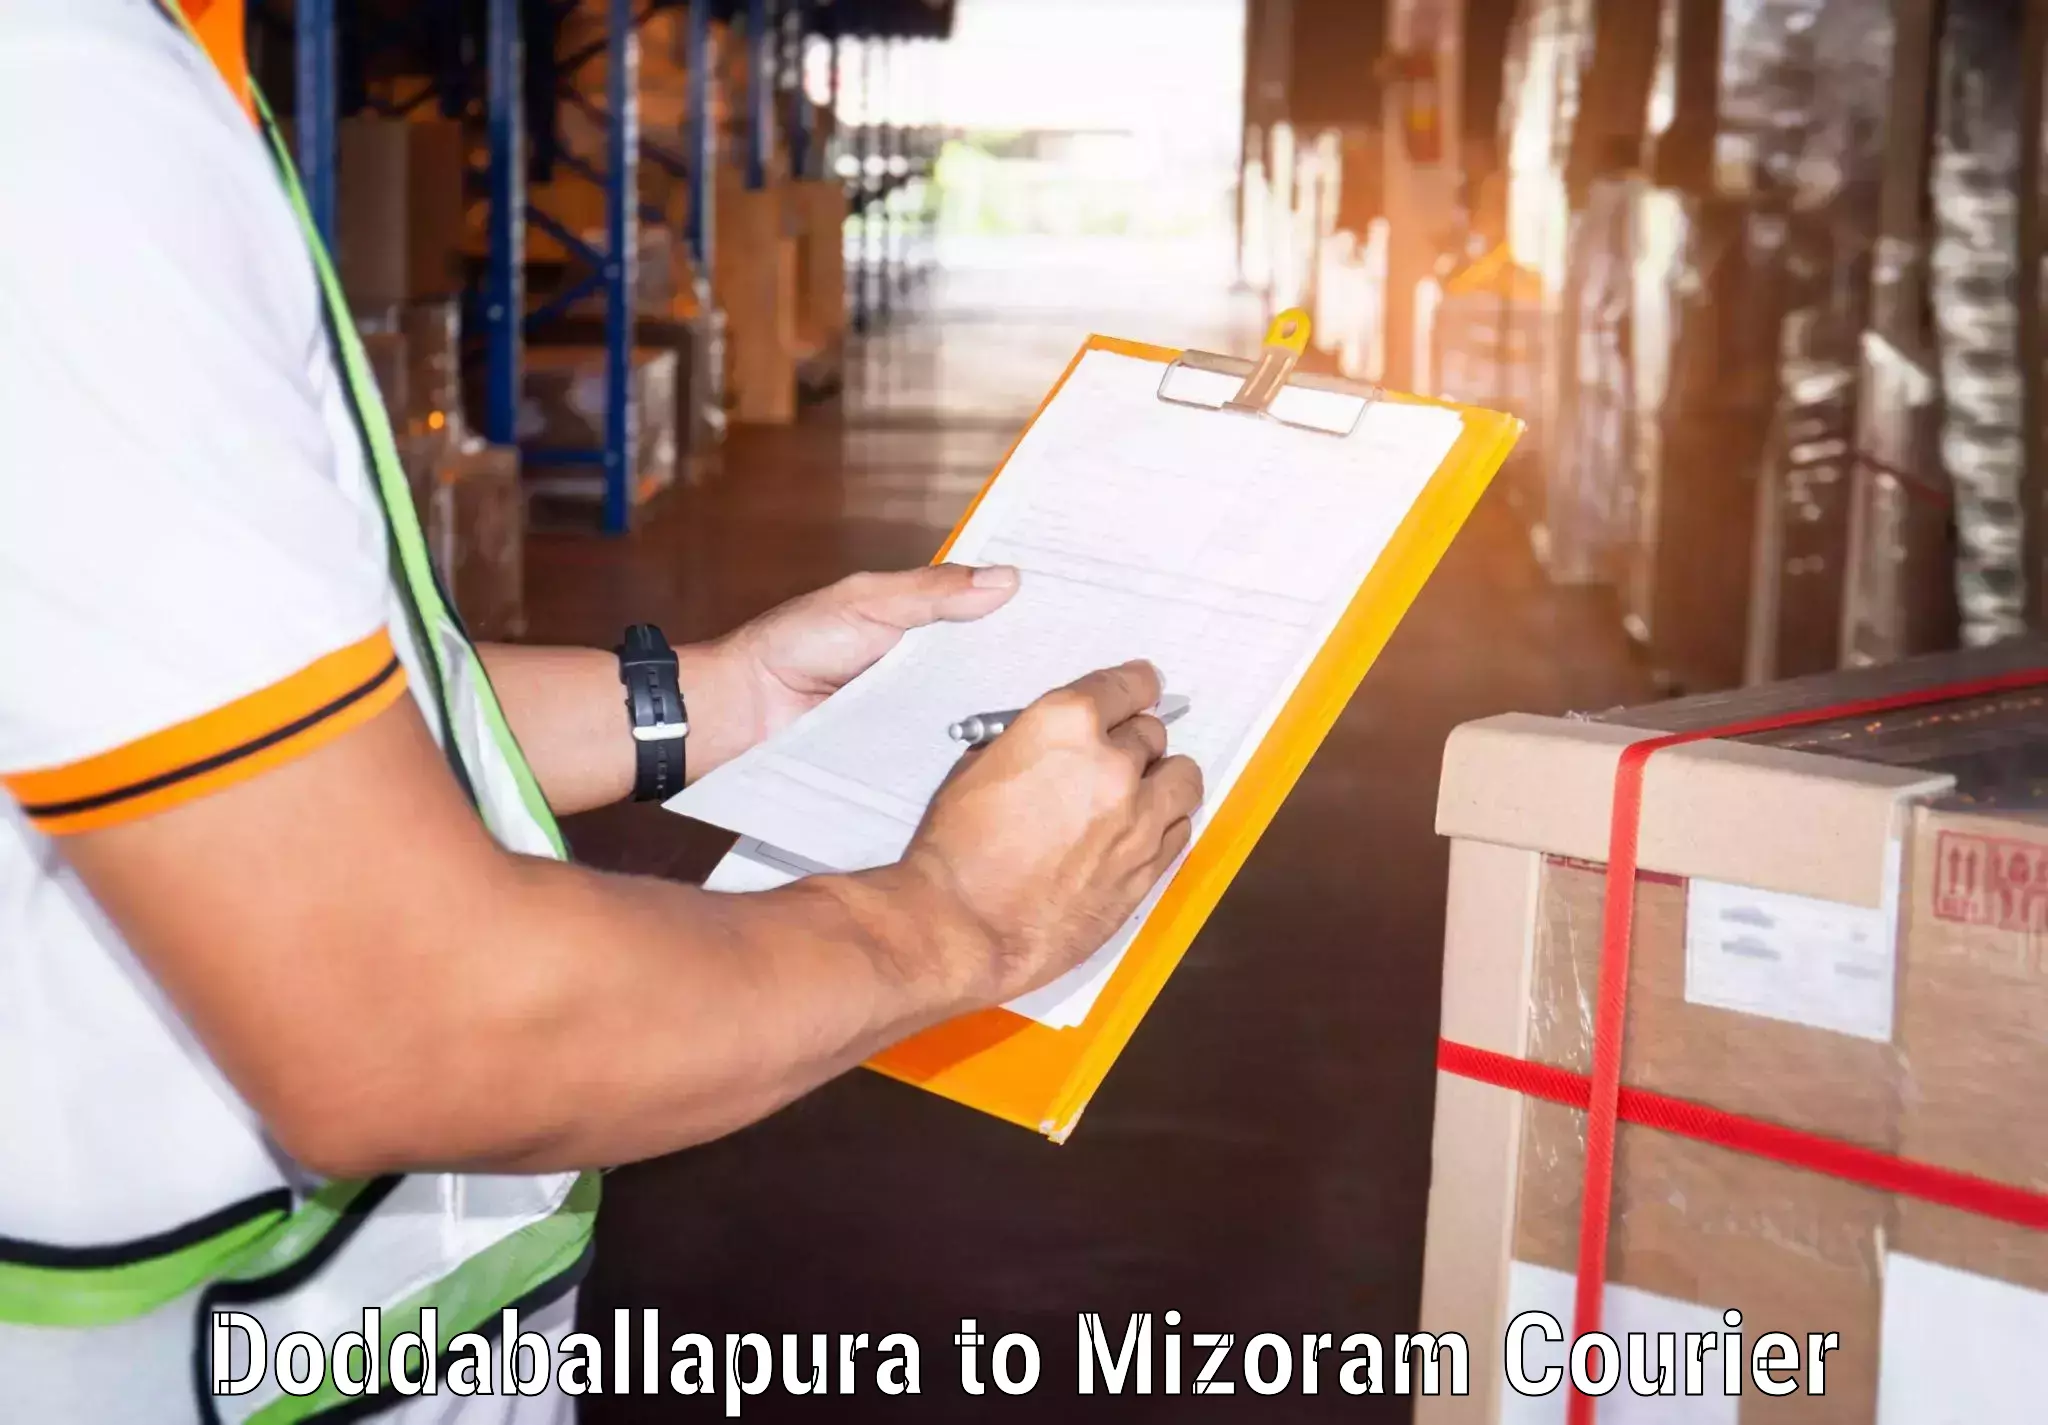 24-hour courier services in Doddaballapura to Mizoram